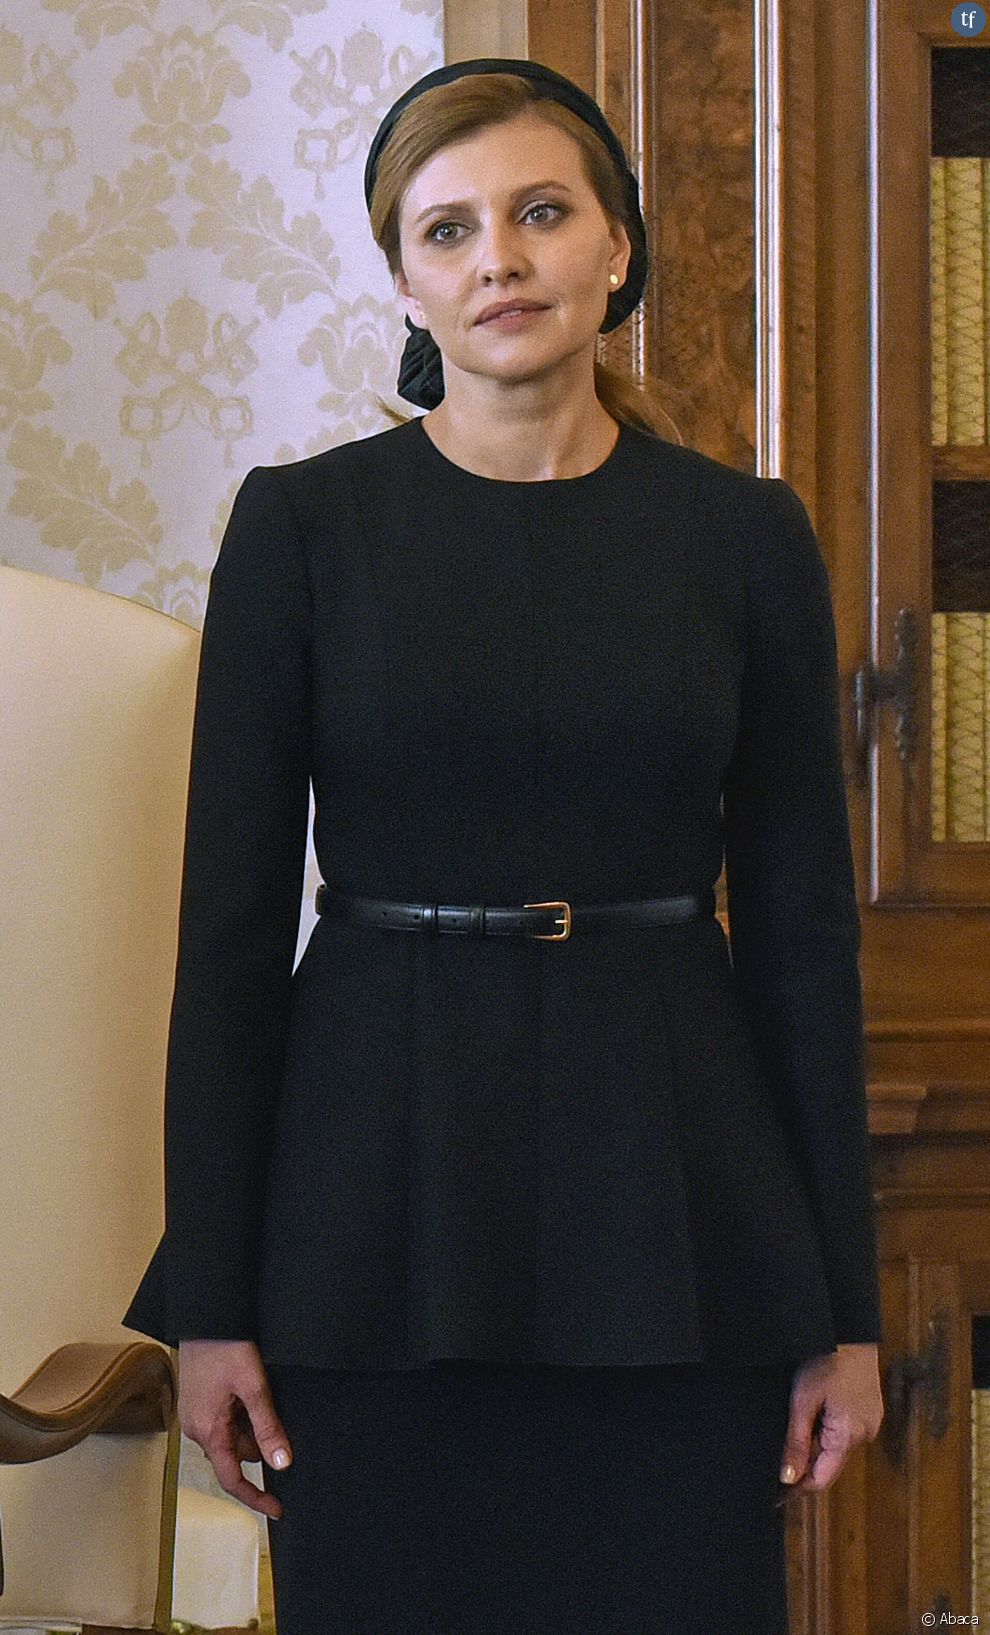  Olena Zelenska lors de la visite du président Volodymyr Zelensky au Vatican le 8 février 2020 